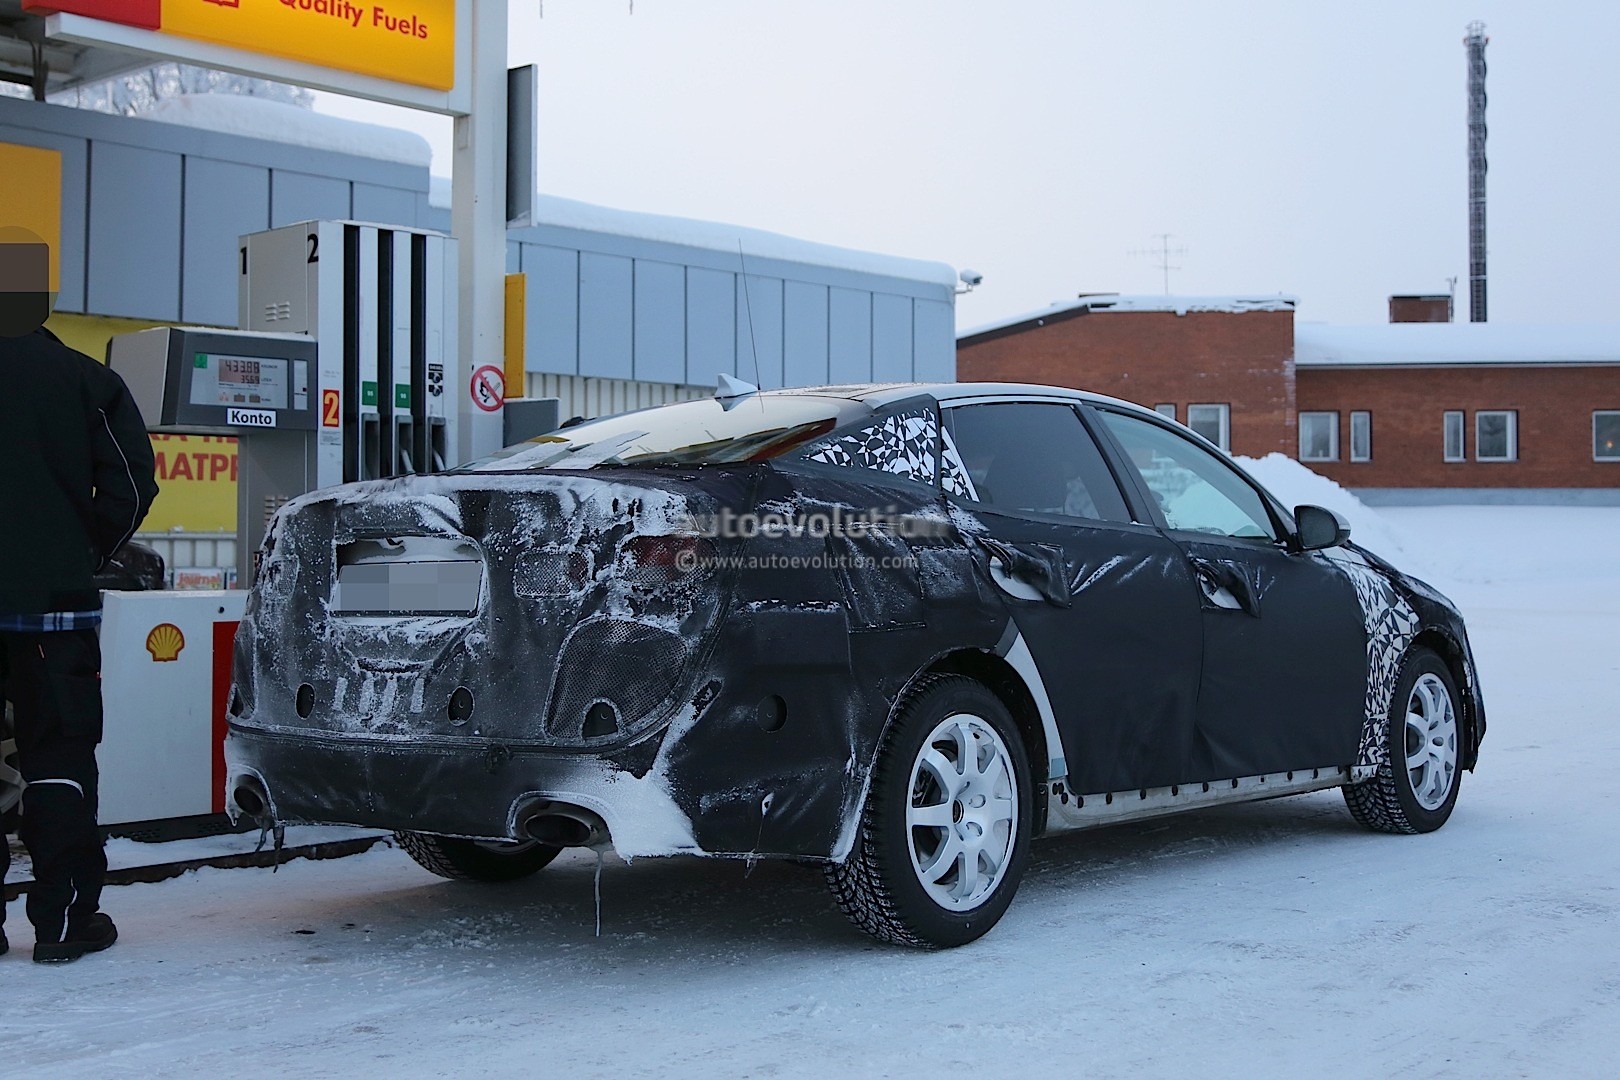 2016 Kia Optima Spied Testing in Extreme Cold - autoevolution